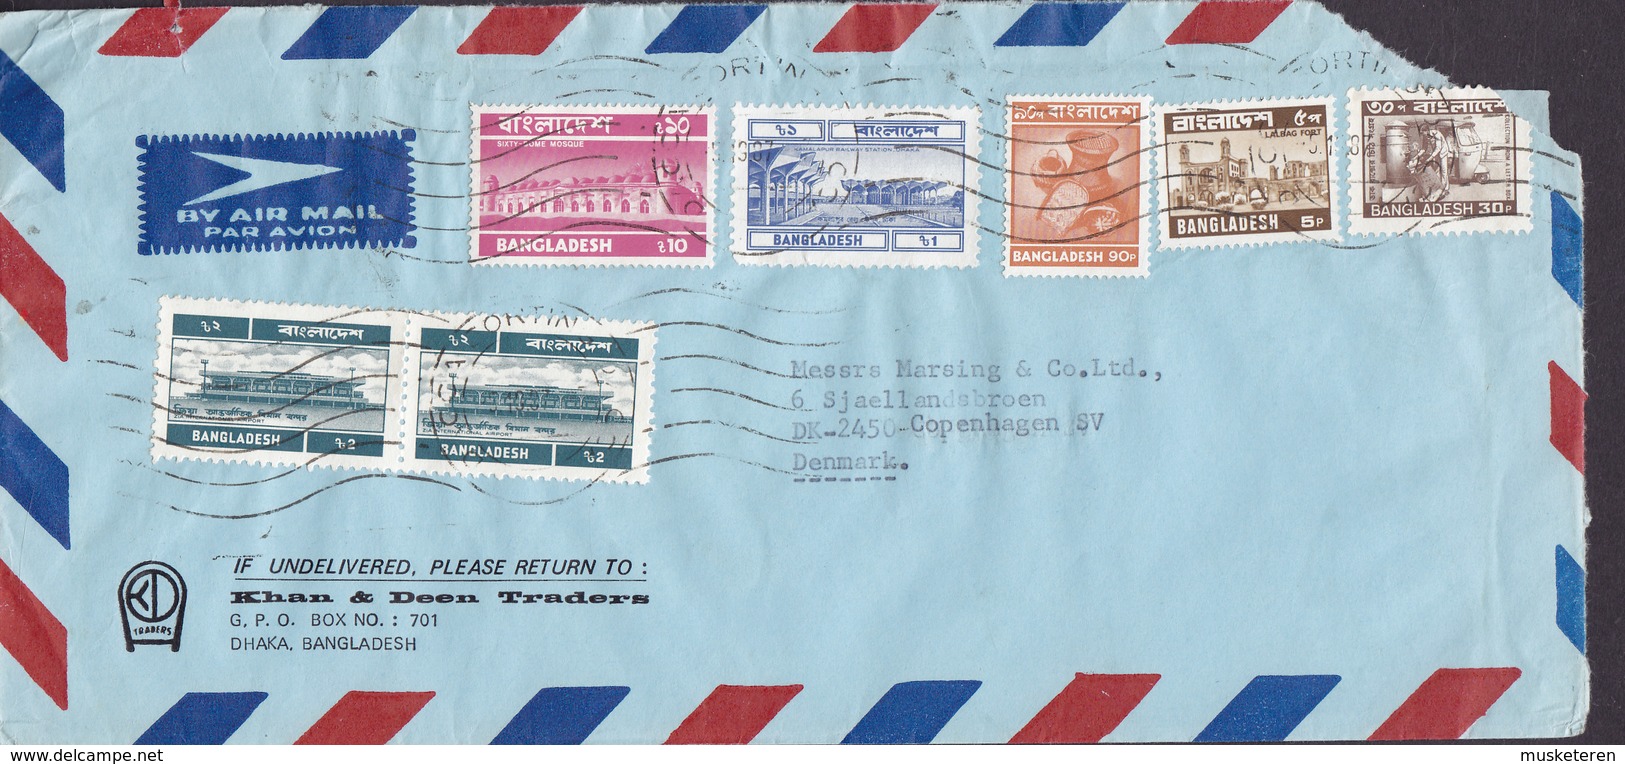 Bangladesh Airmail Par Avion KHAN & DEEN TRADERS 1987 Mult Franked Cover Brief To Denmark 1T, (2x) 2T,  10T Stamps - Bangladesch